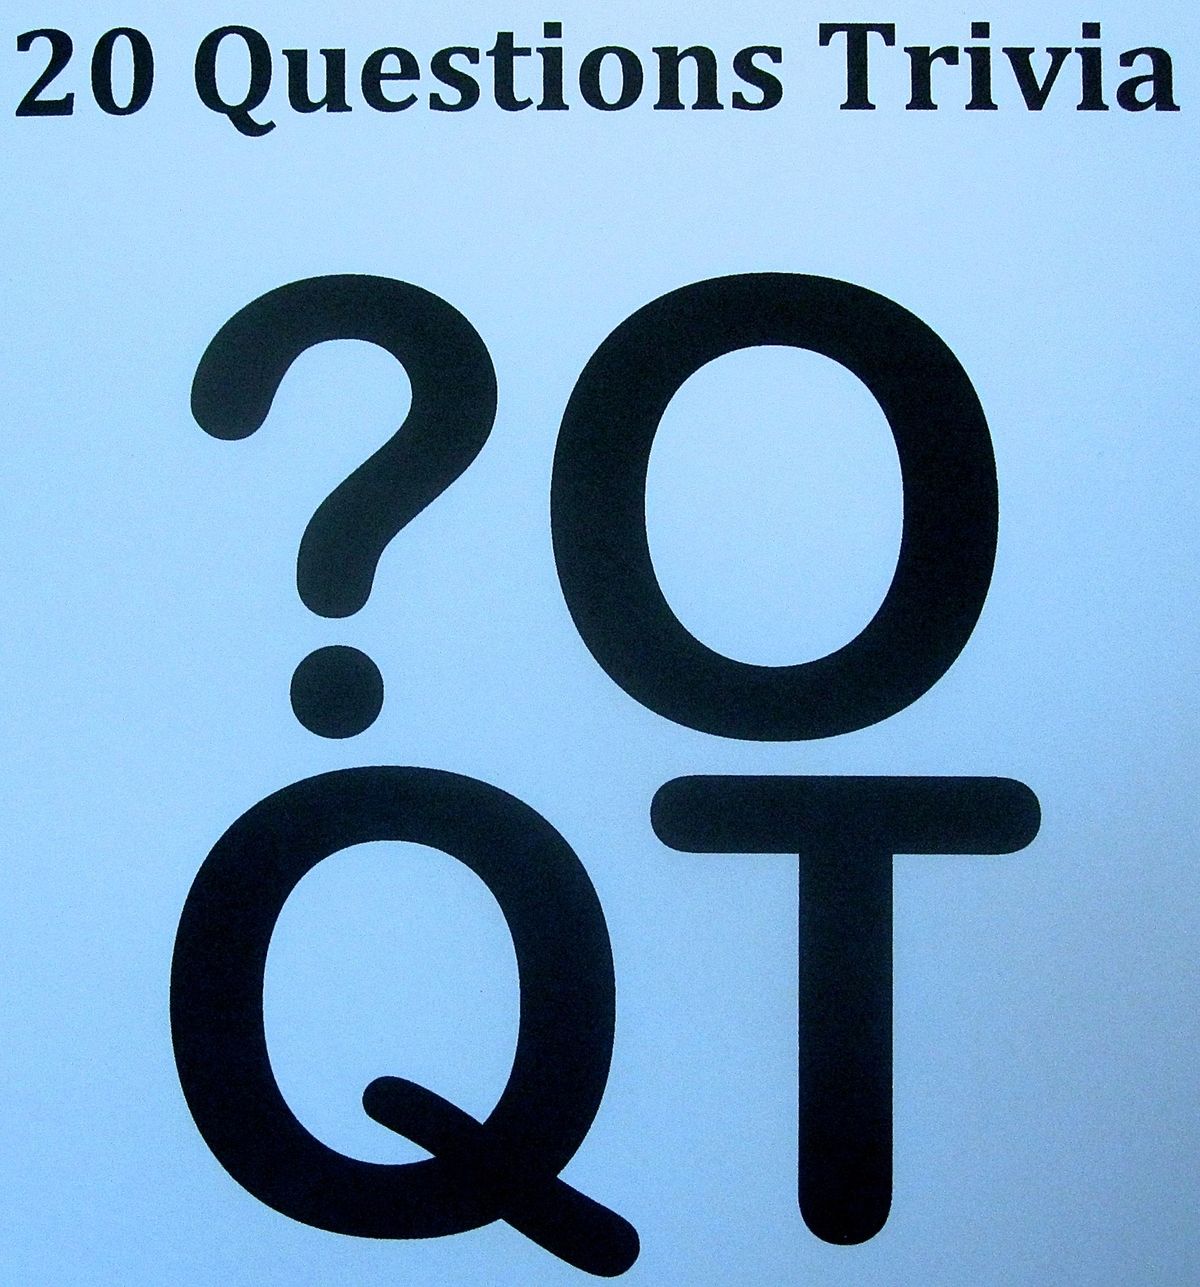 20 Questions Trivia THURSDAY 